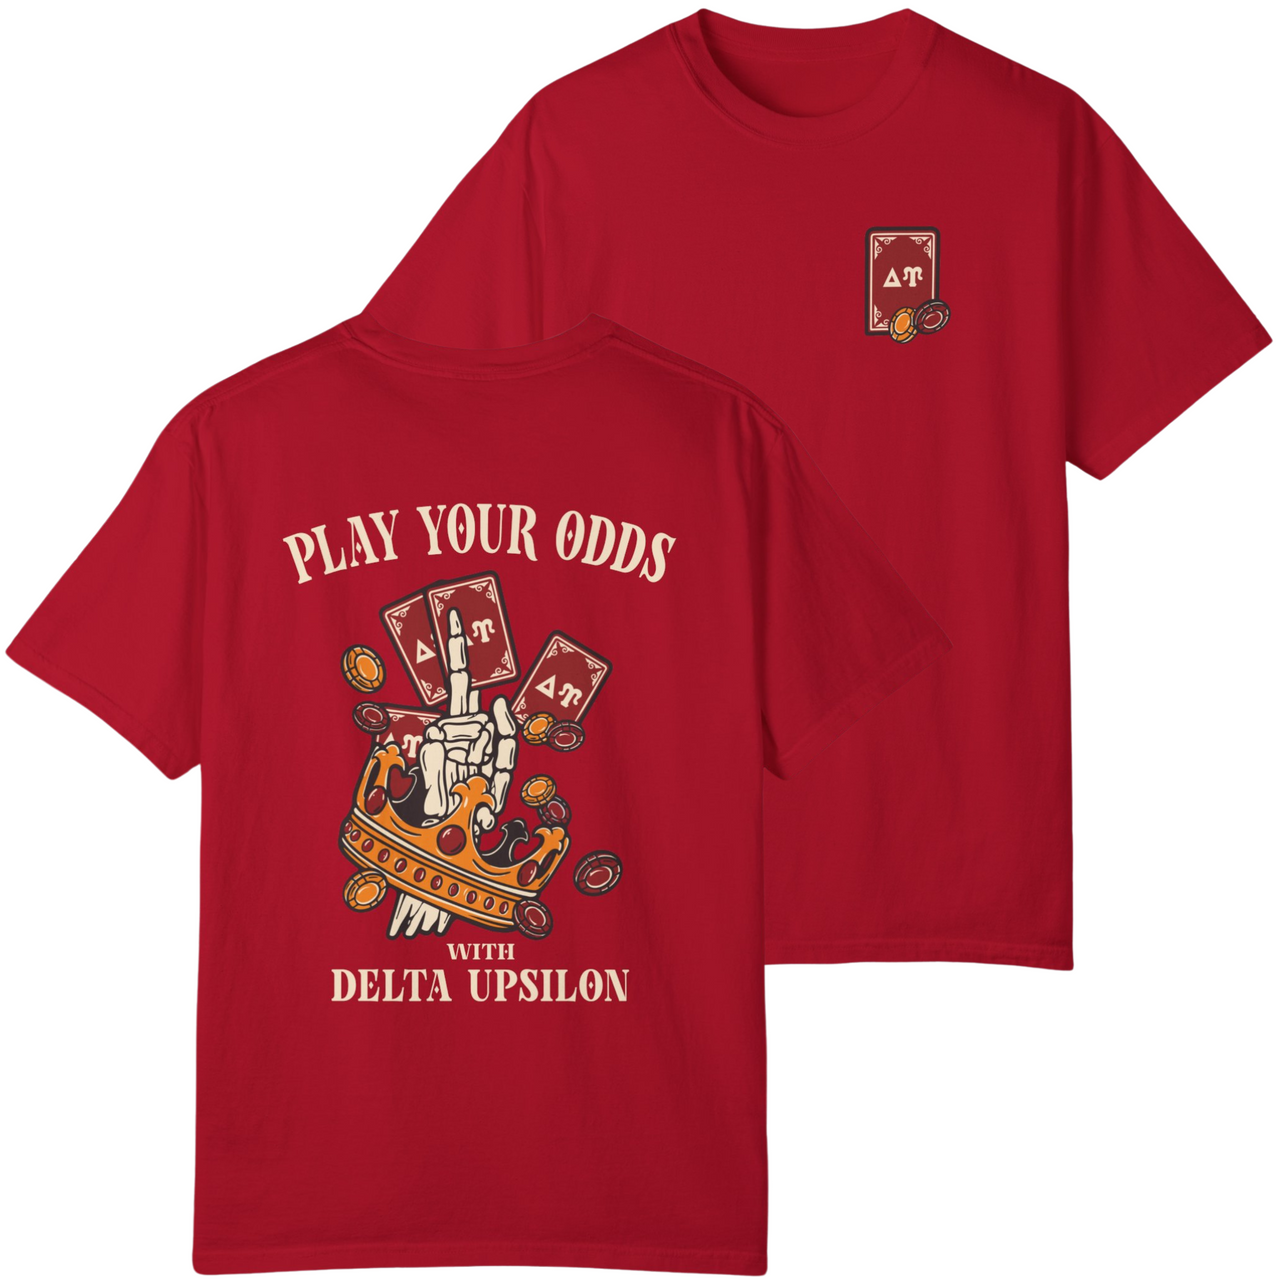 Delta Upsilon Graphic T-Shirt | Play Your Odds